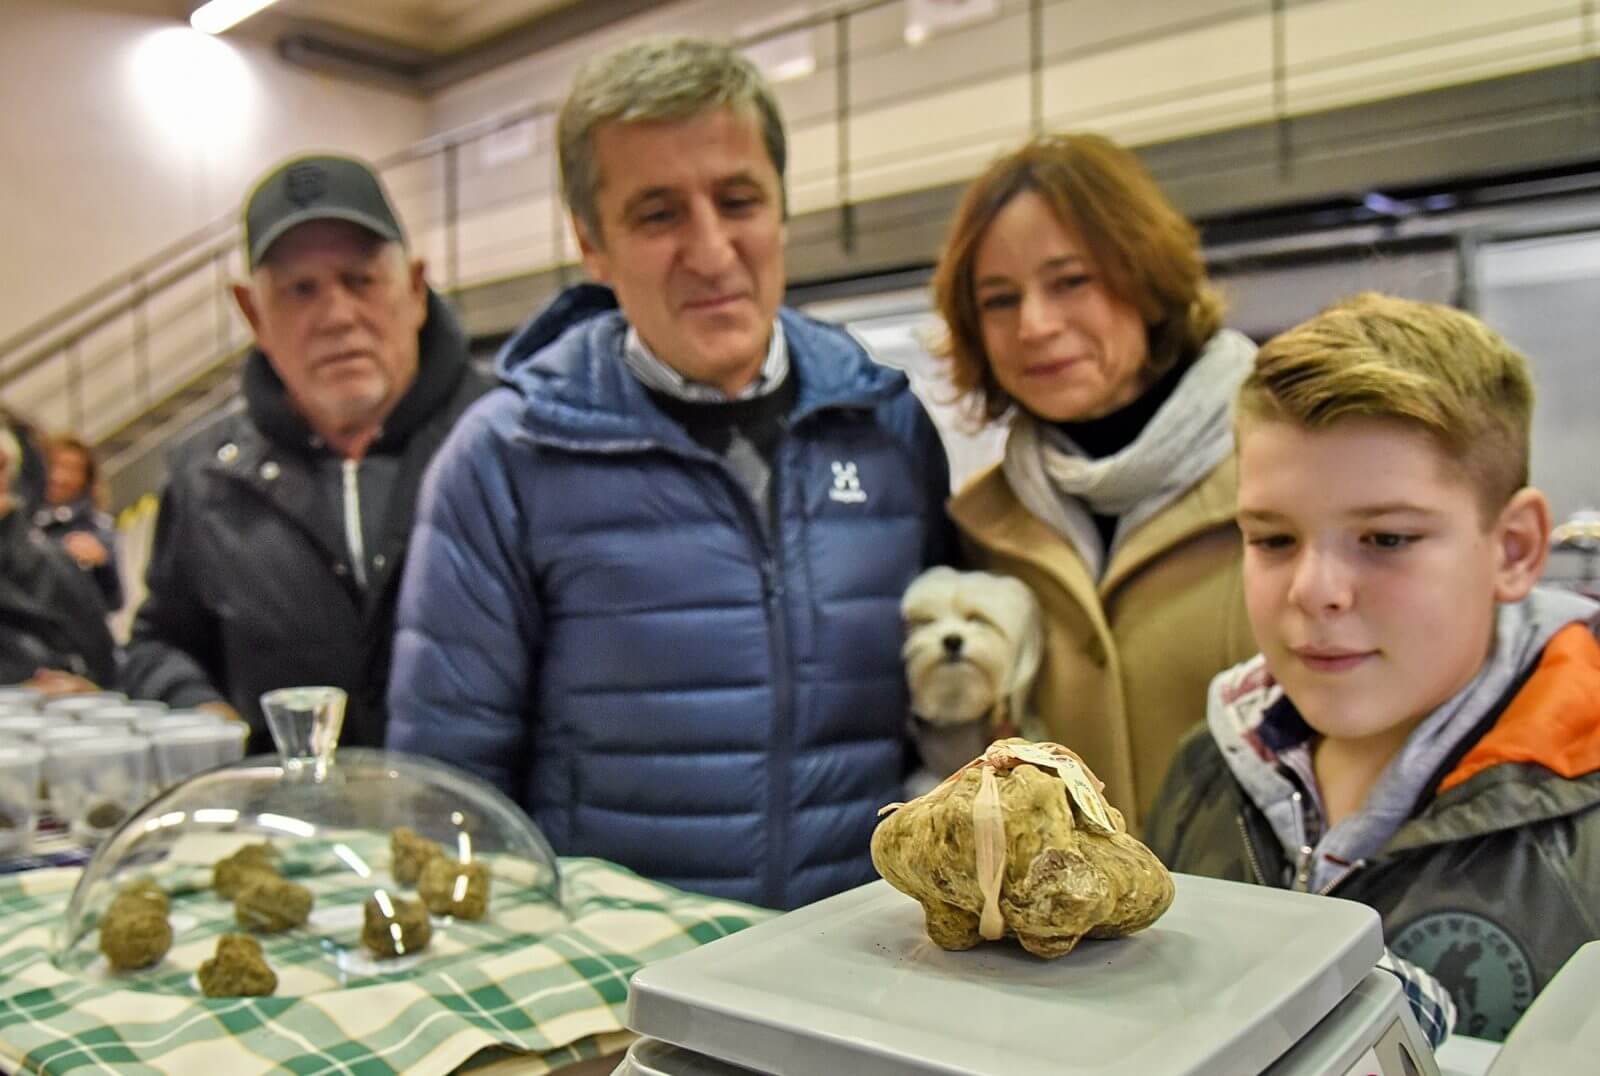 white truffle found in Asti countryside